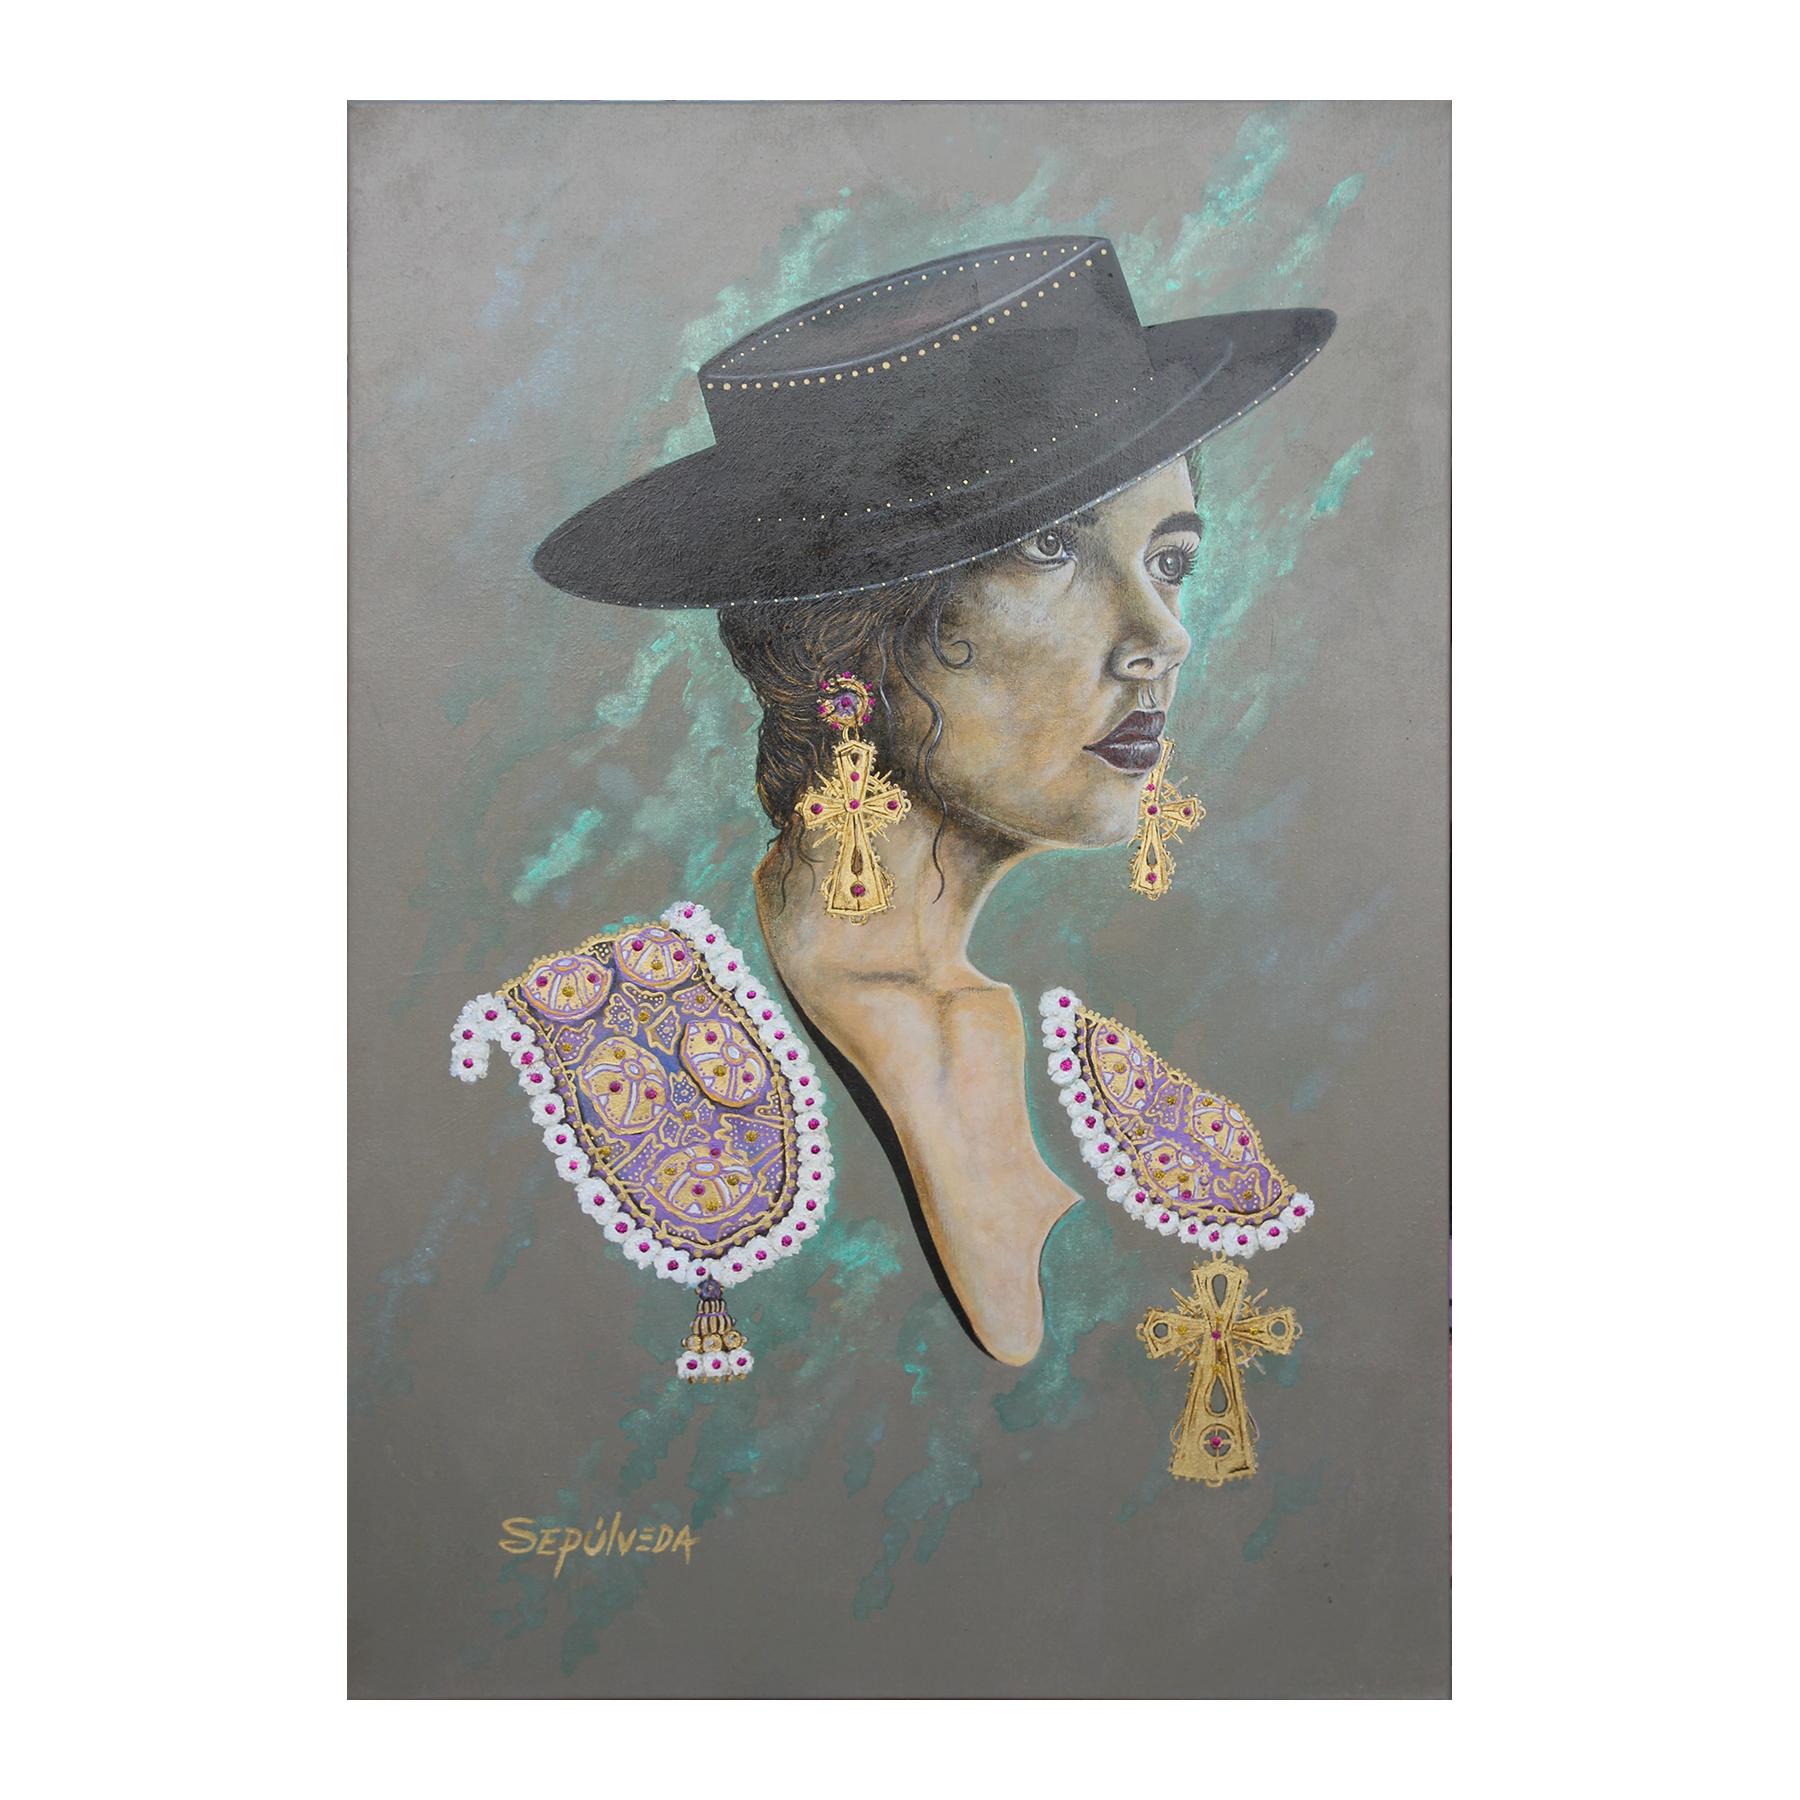 Benjamin Sepulveda Figurative Painting - "Sevillana" Pastel Toned Modern Spanish Female Portrait